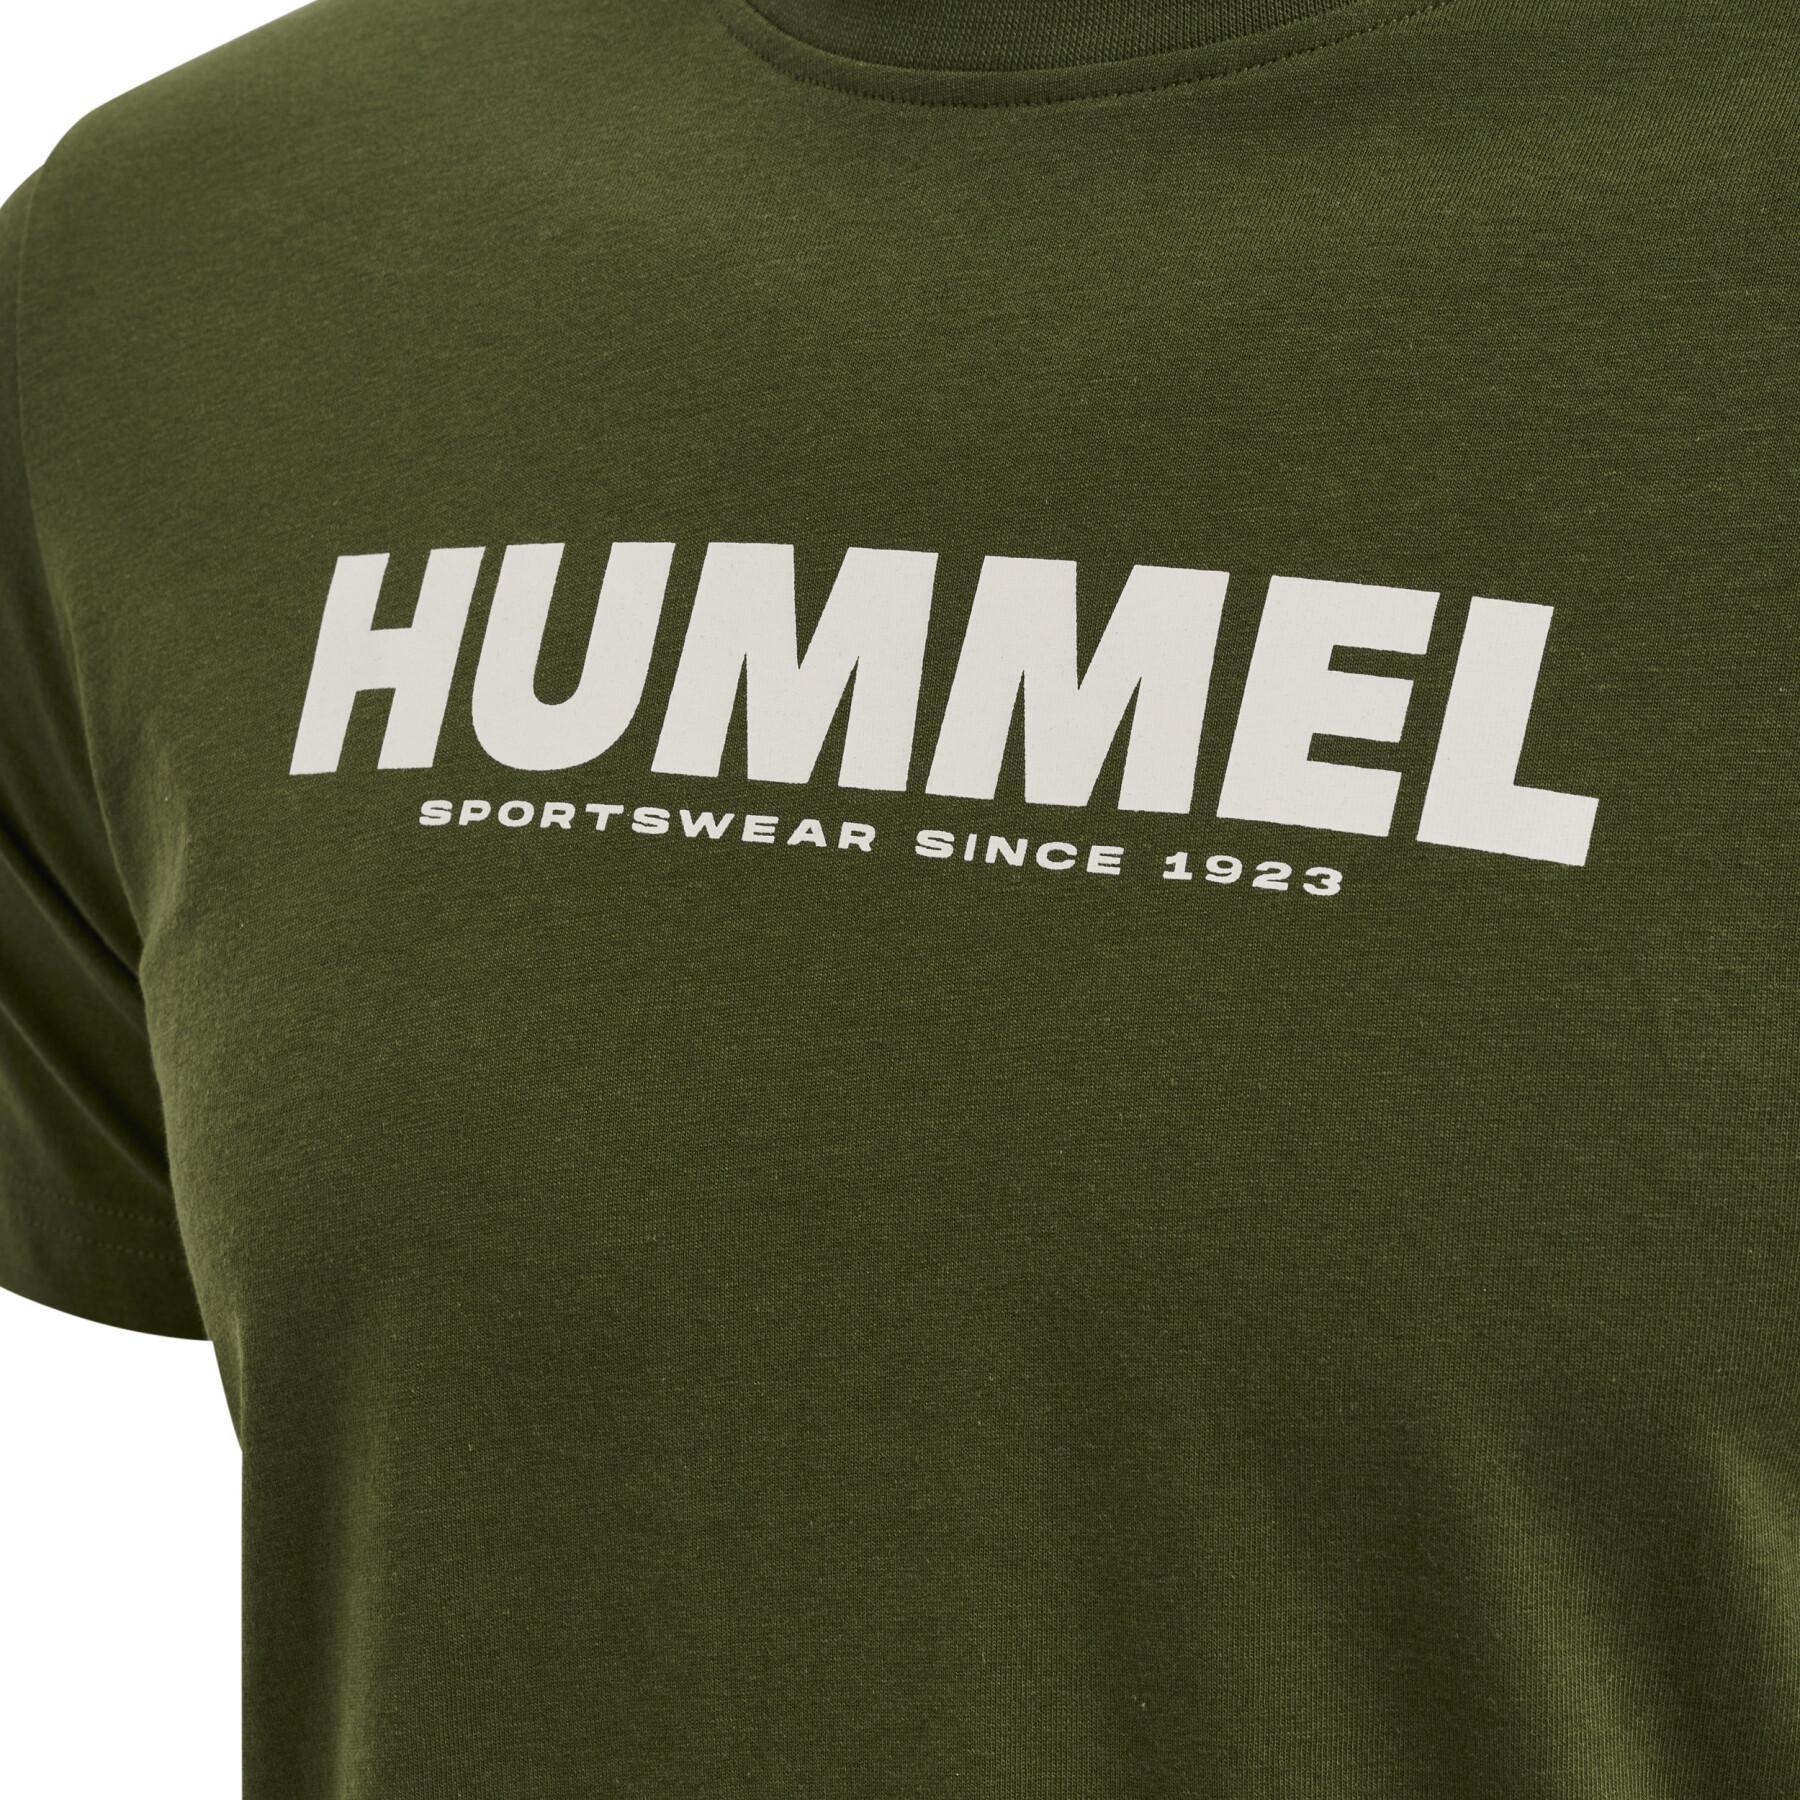 T-shirt Hummel Legacy